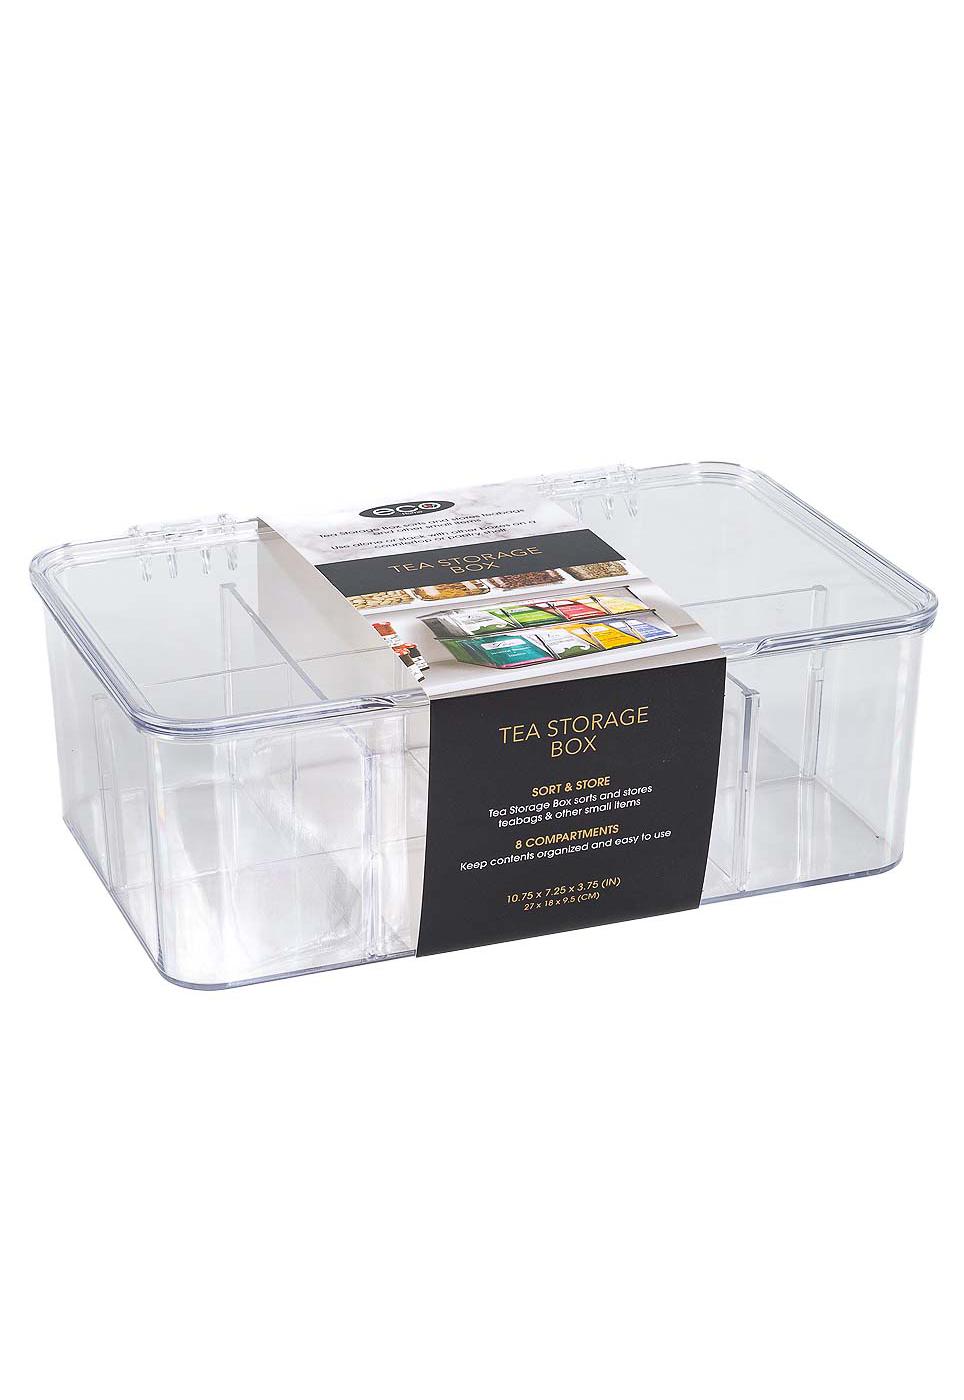 Eco Home Tea Storage Box; image 2 of 2